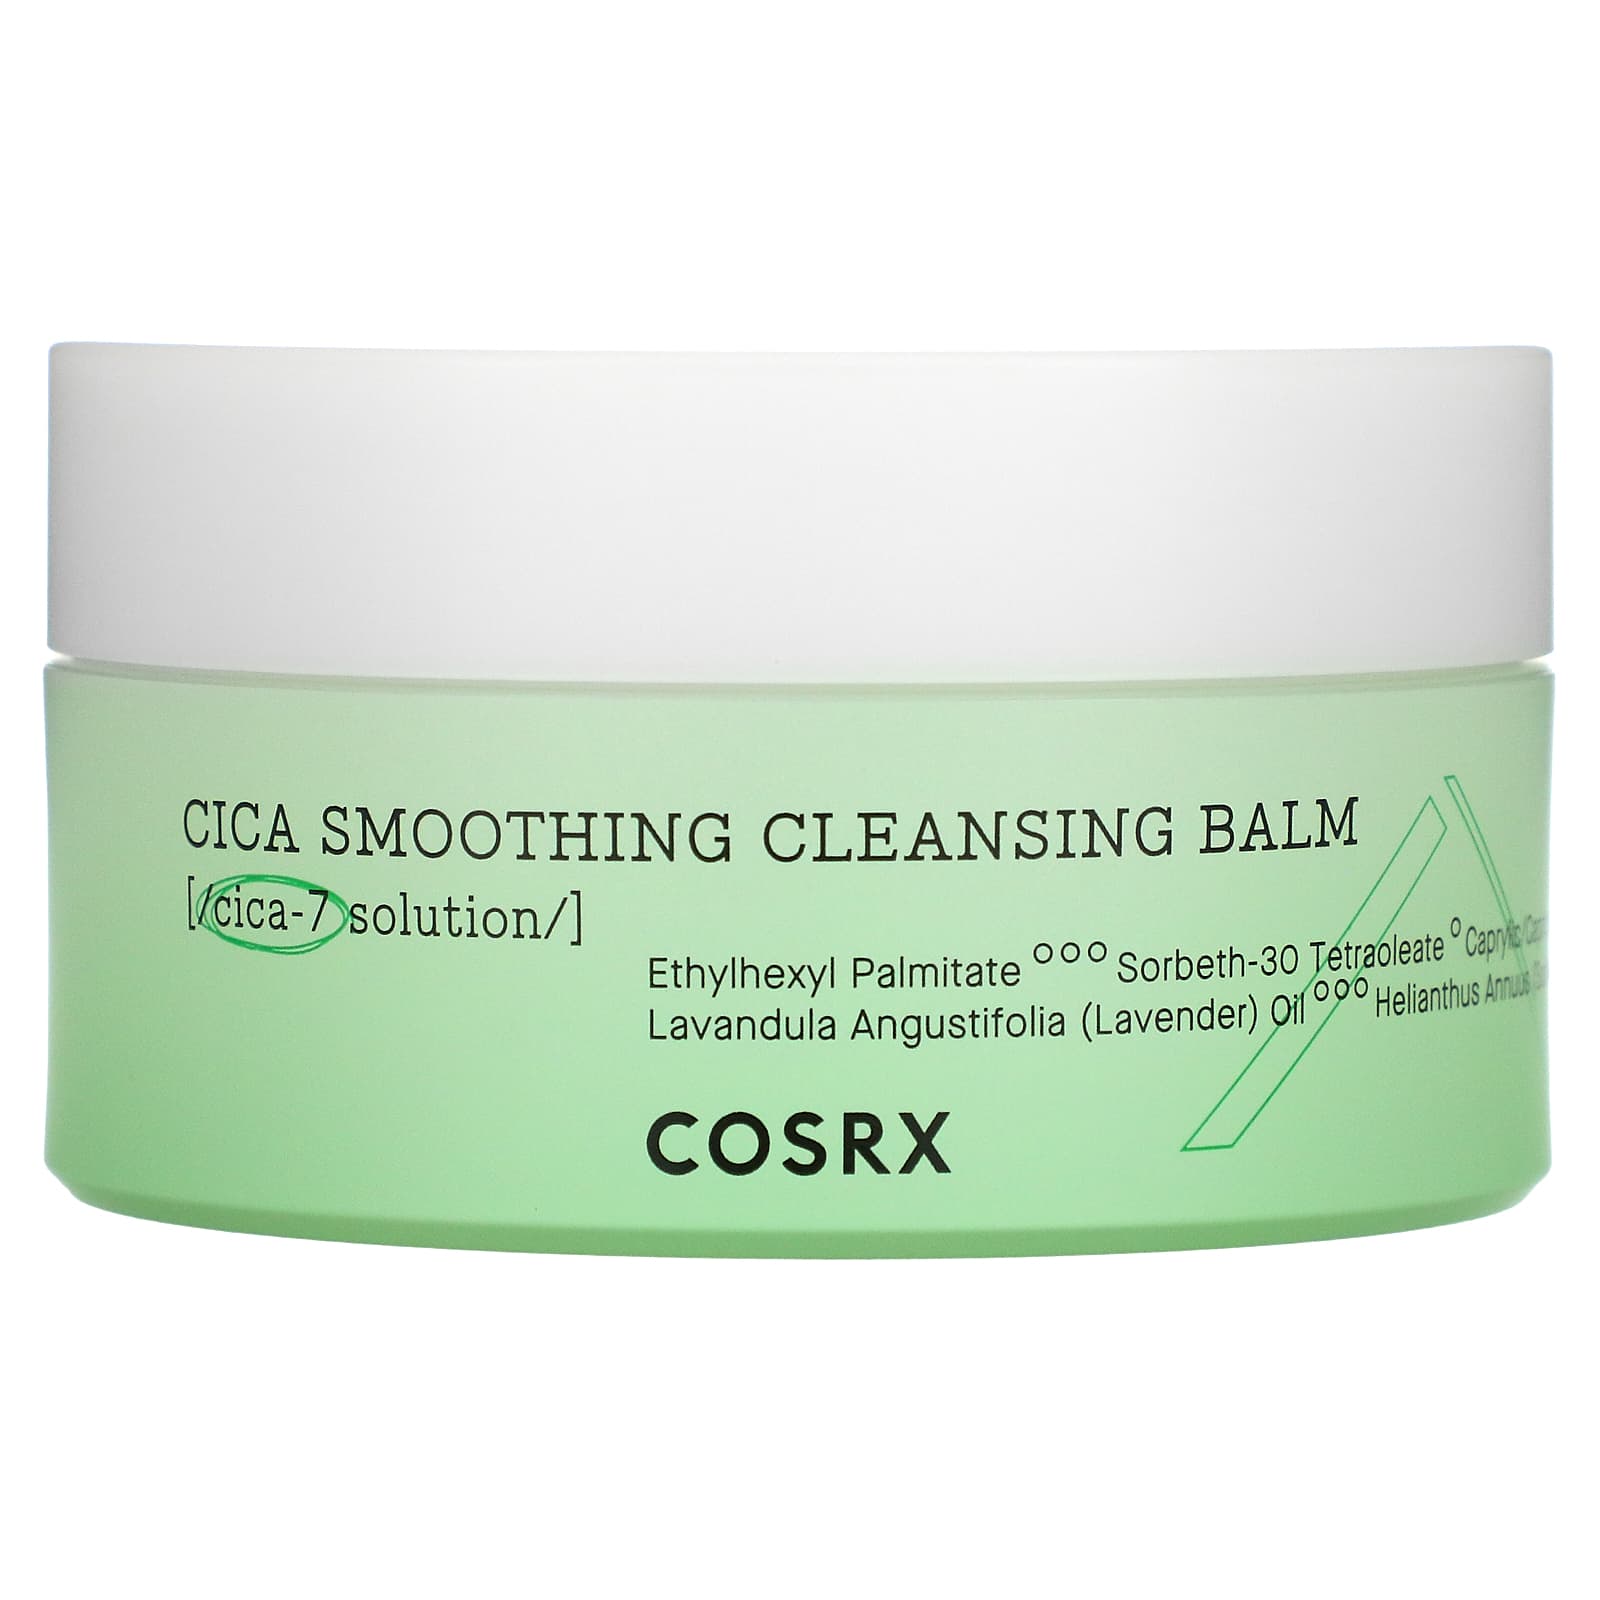 Cosrx Cica Smoothing Cleansing Balm, 4.05 fl oz (120 ml)